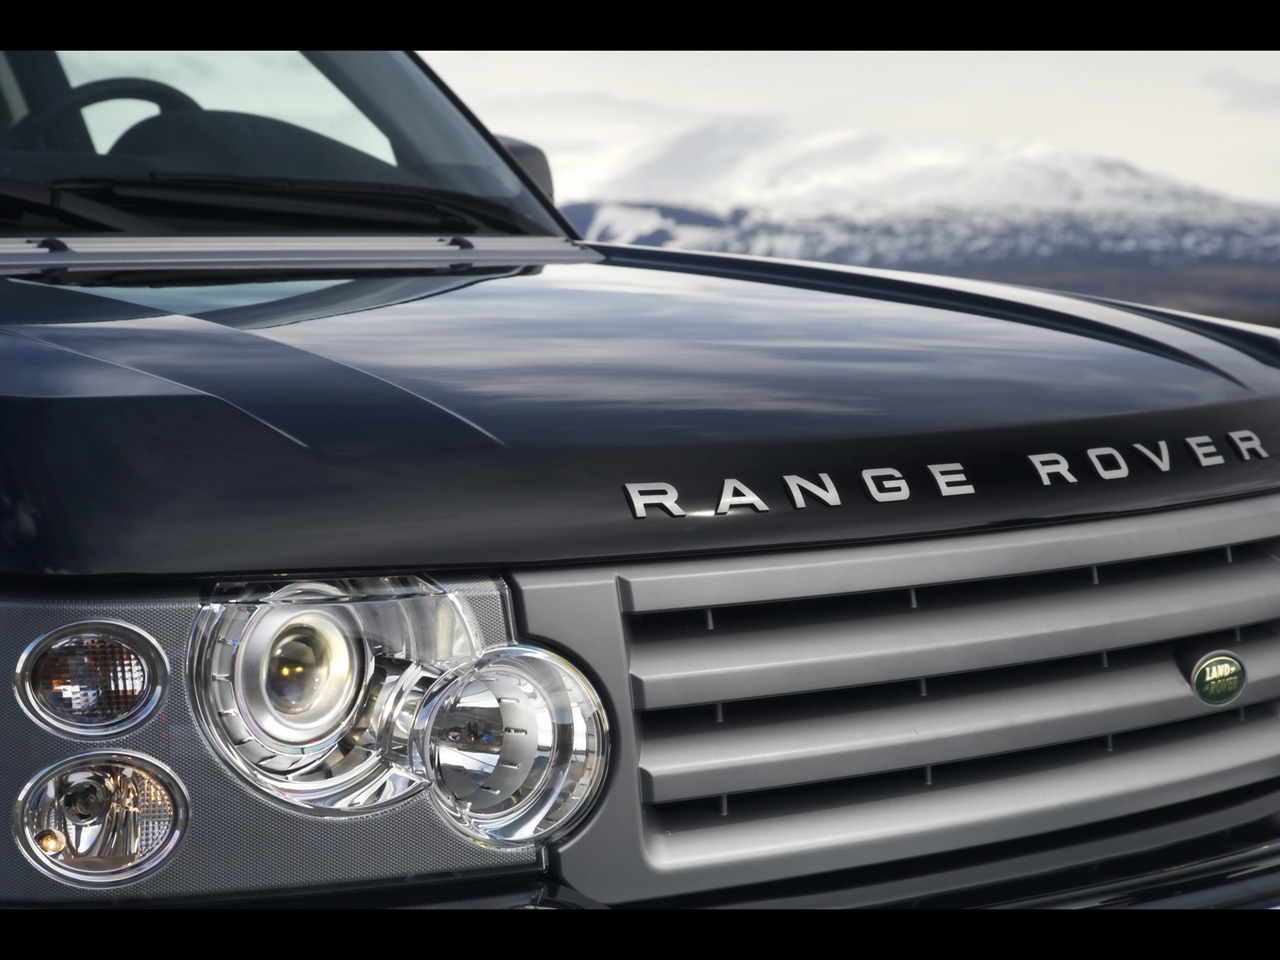 Range Rover All Cars Name - HD Wallpaper 